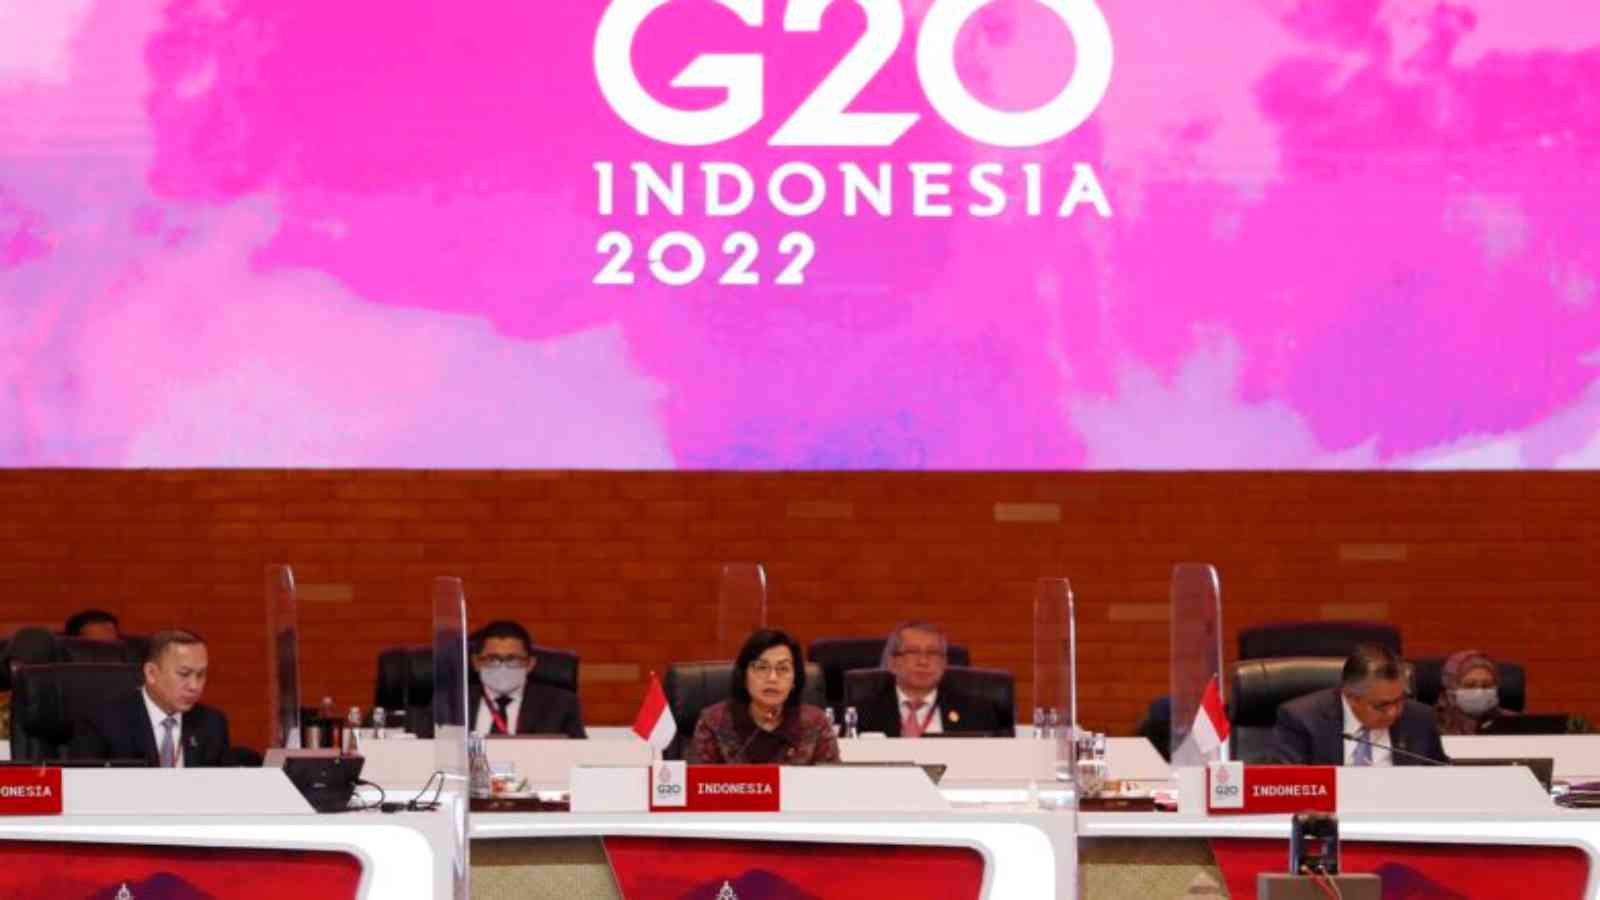 G20 finance leaders